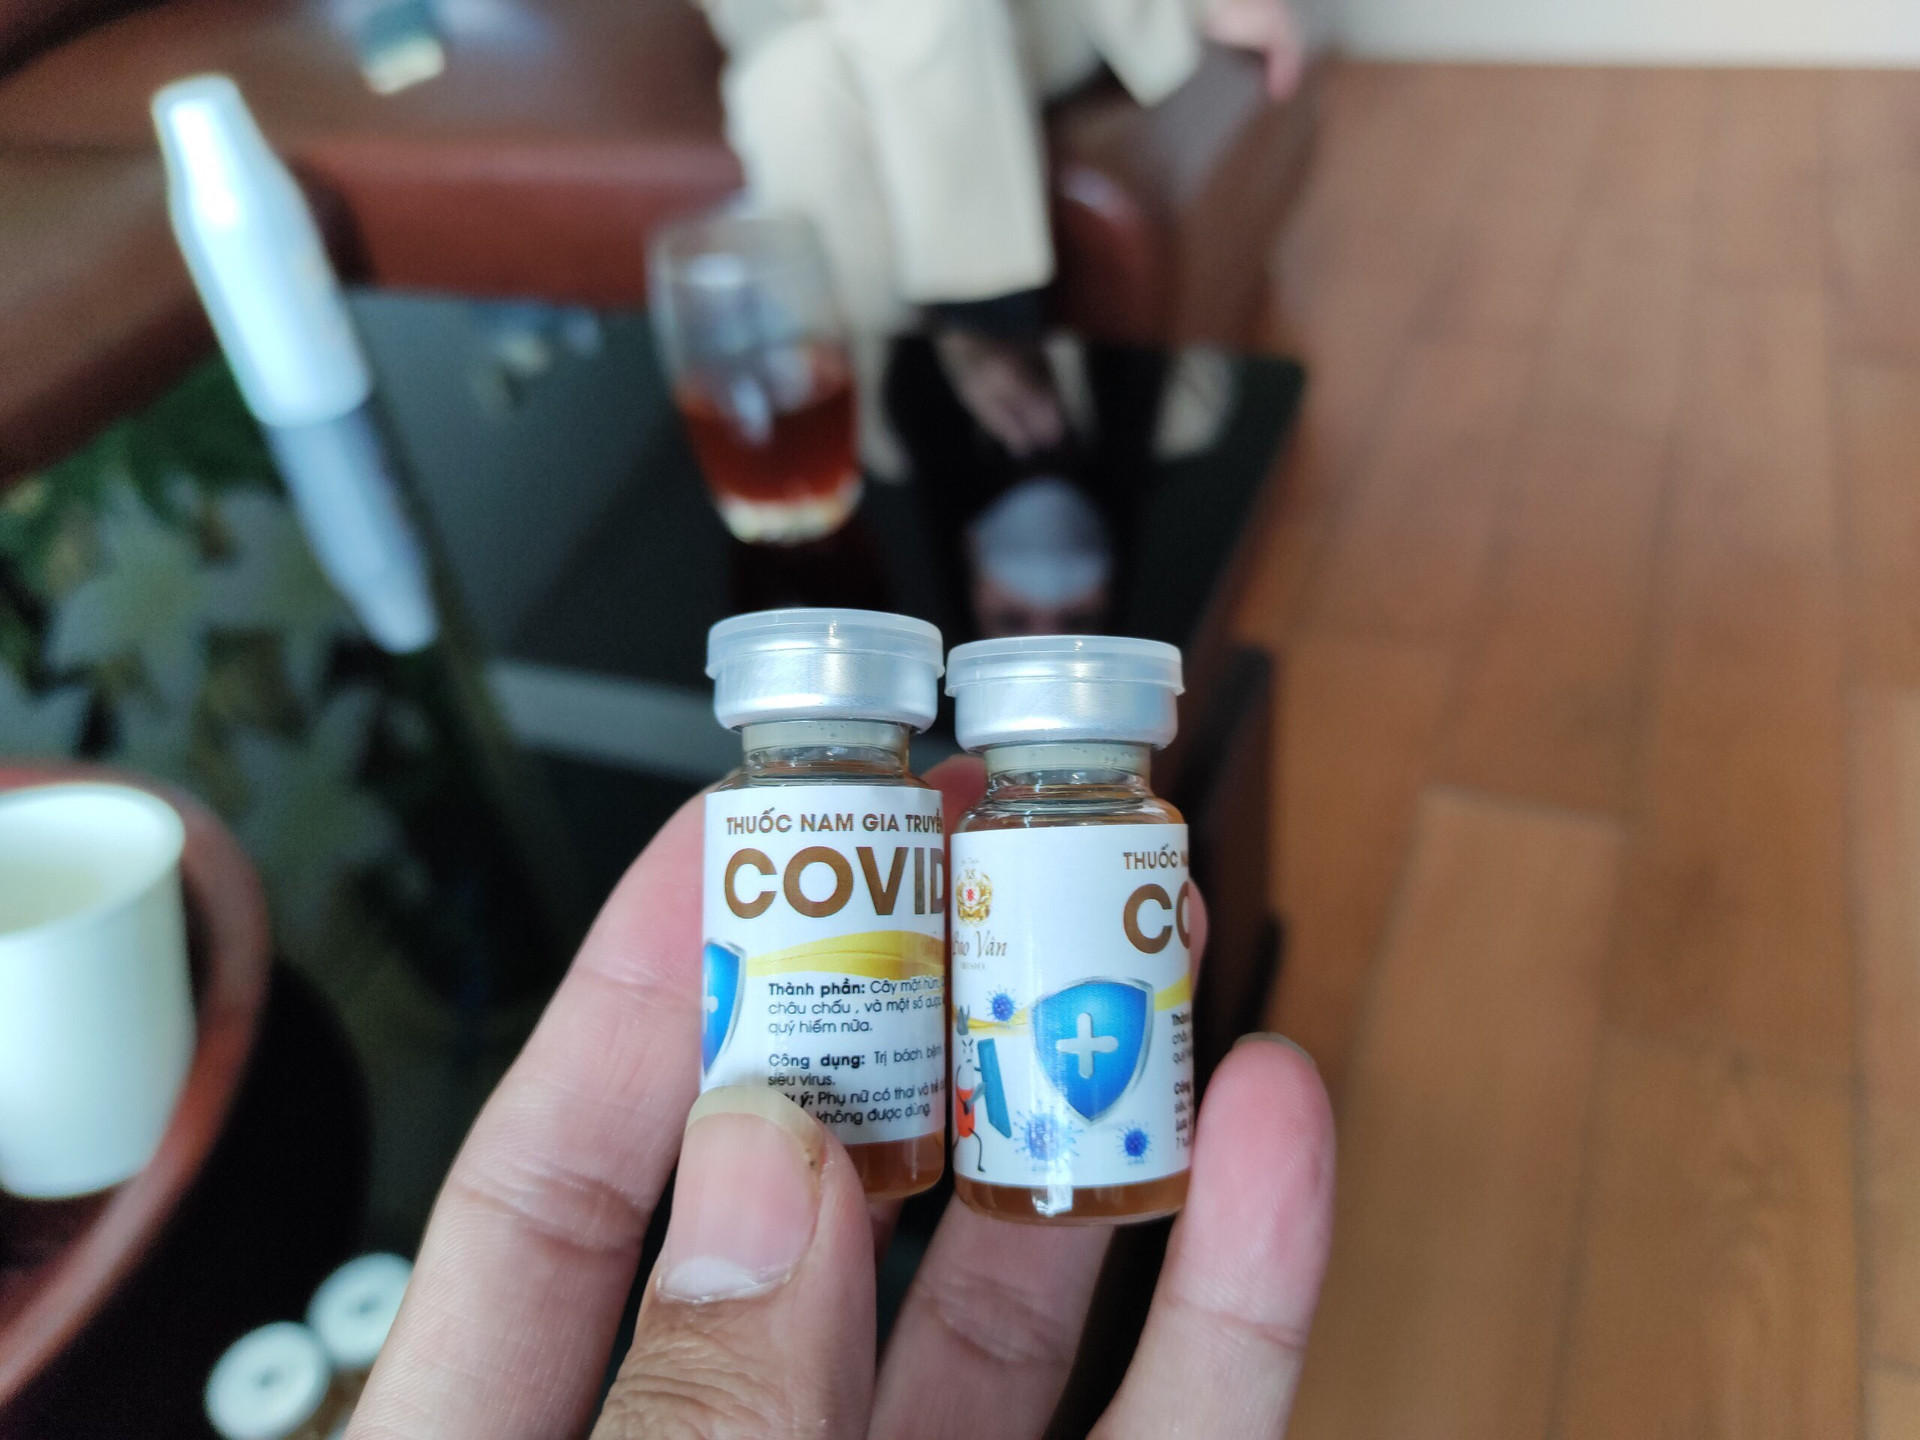 Hoang mang giữa ma trận thuốc chữa Covid-19 - 4